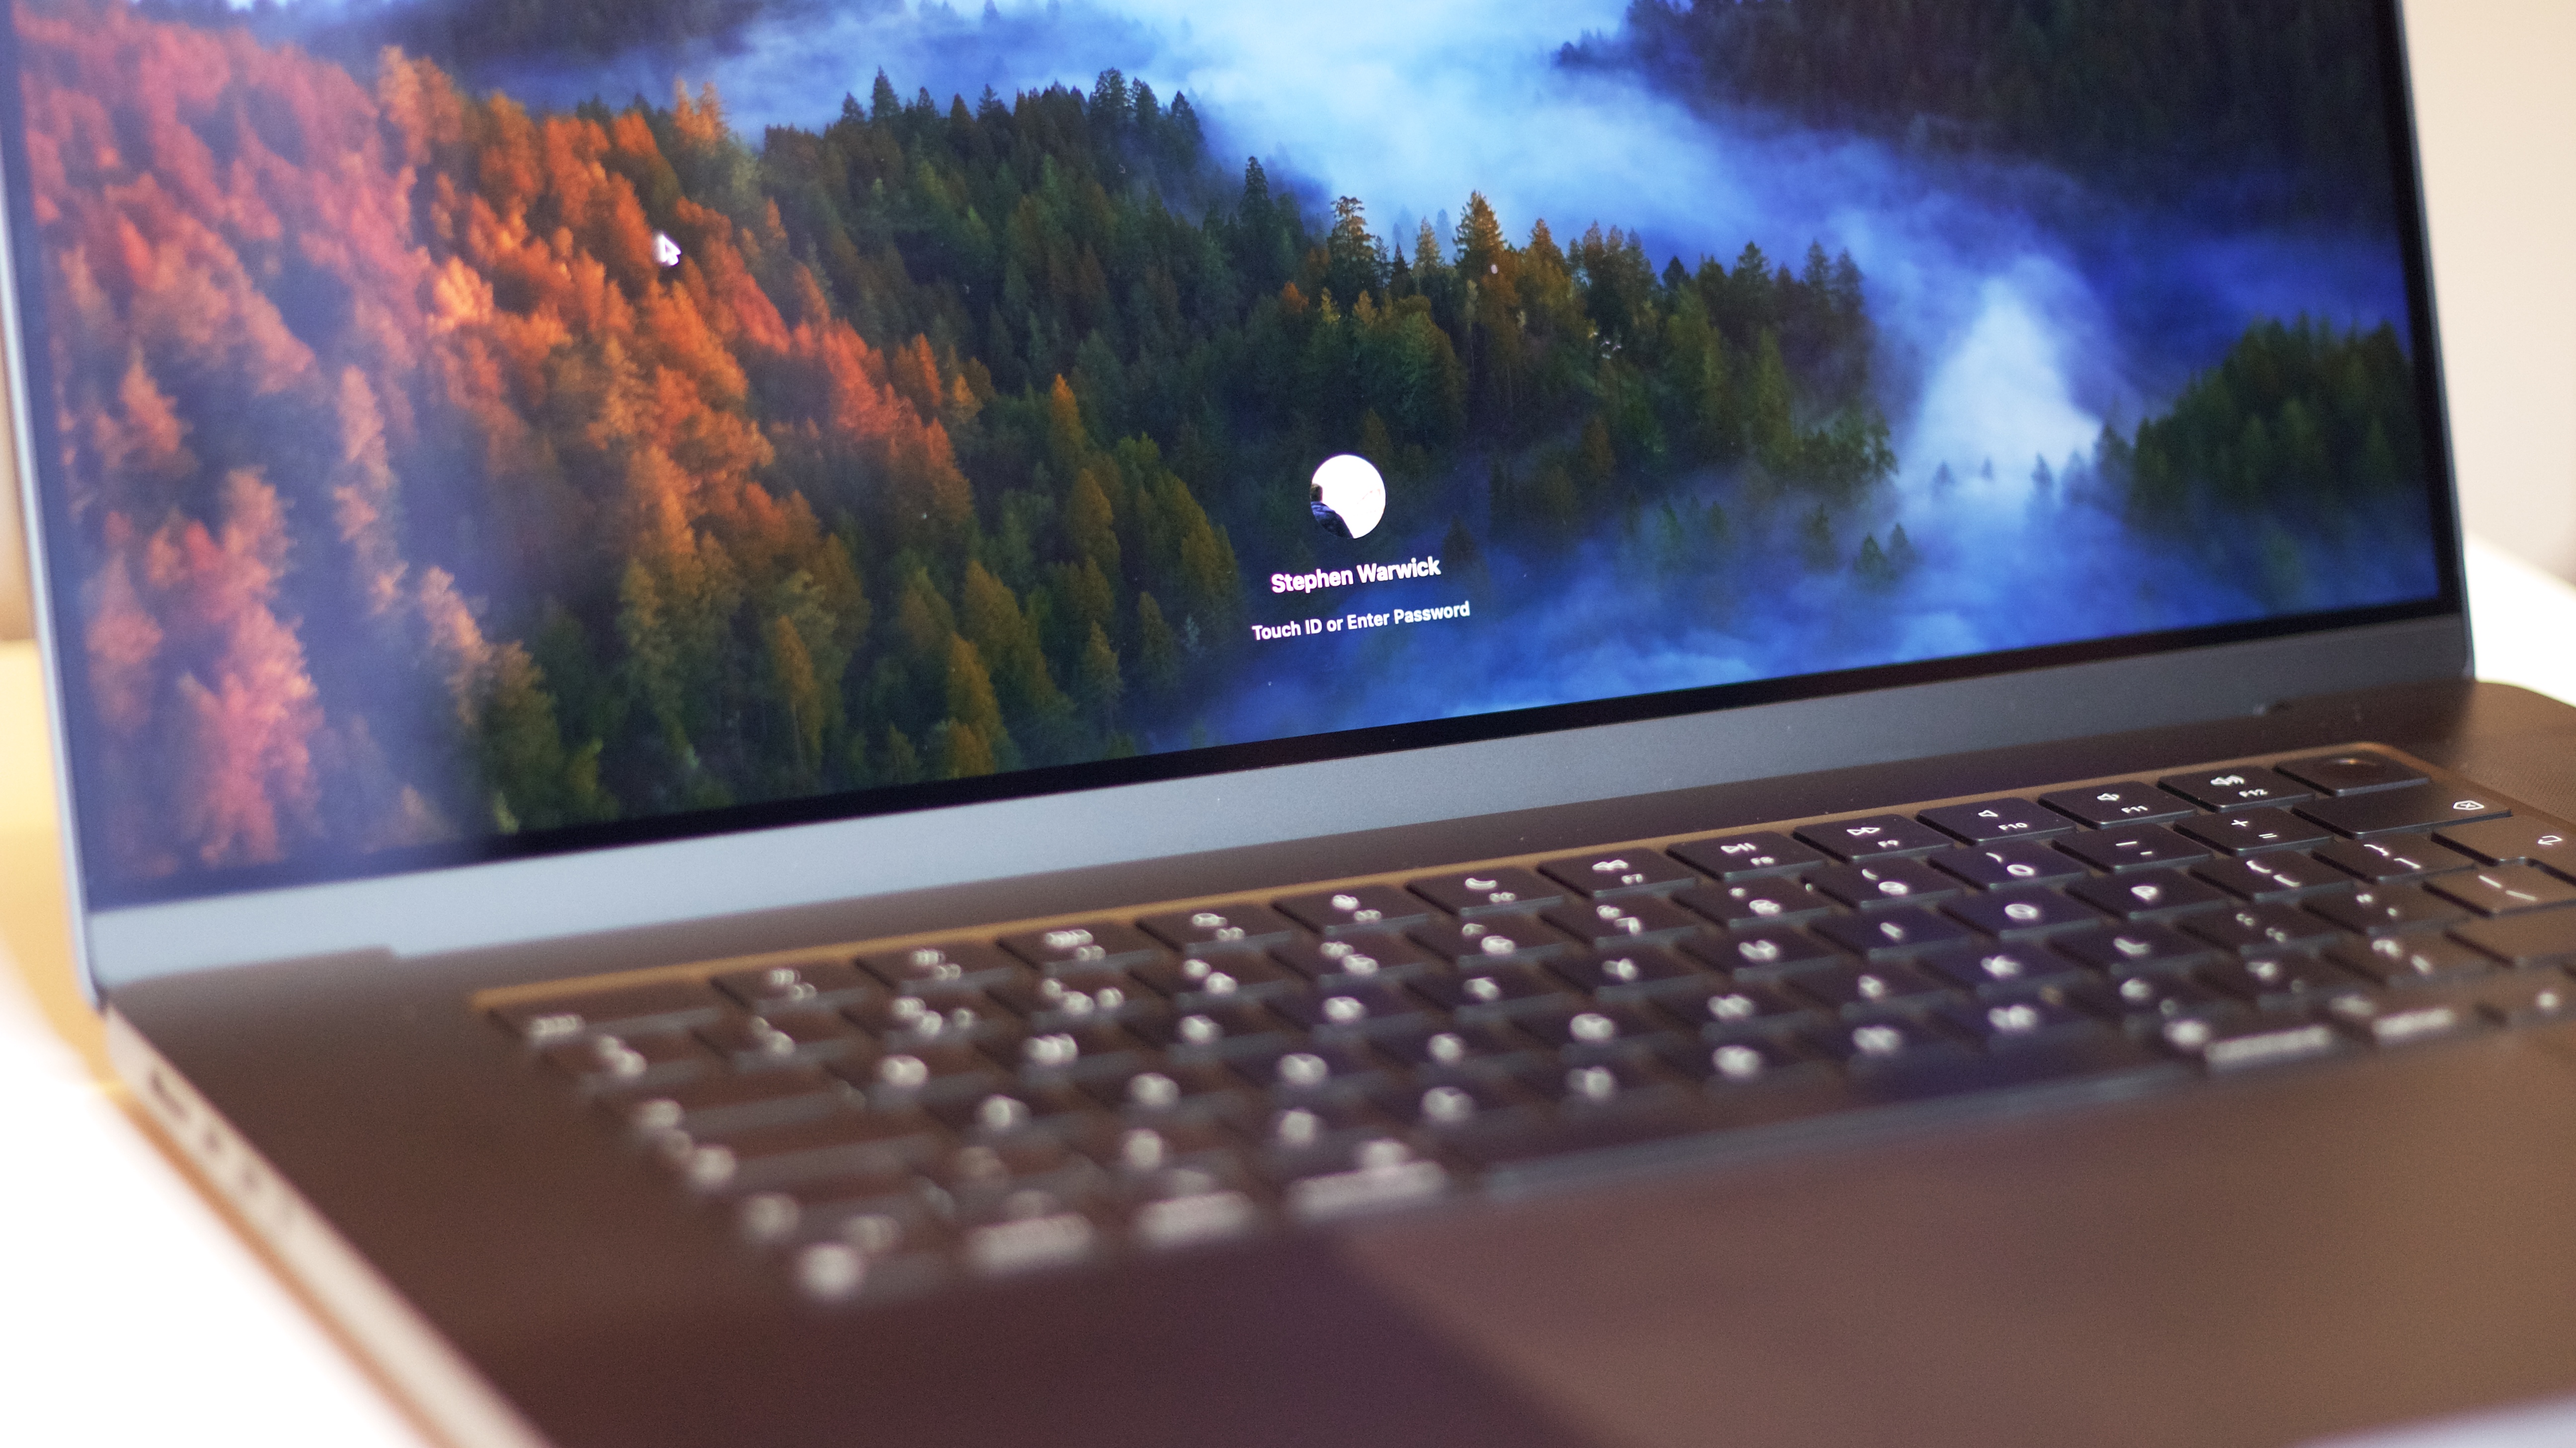 M3 MacBook Pro review